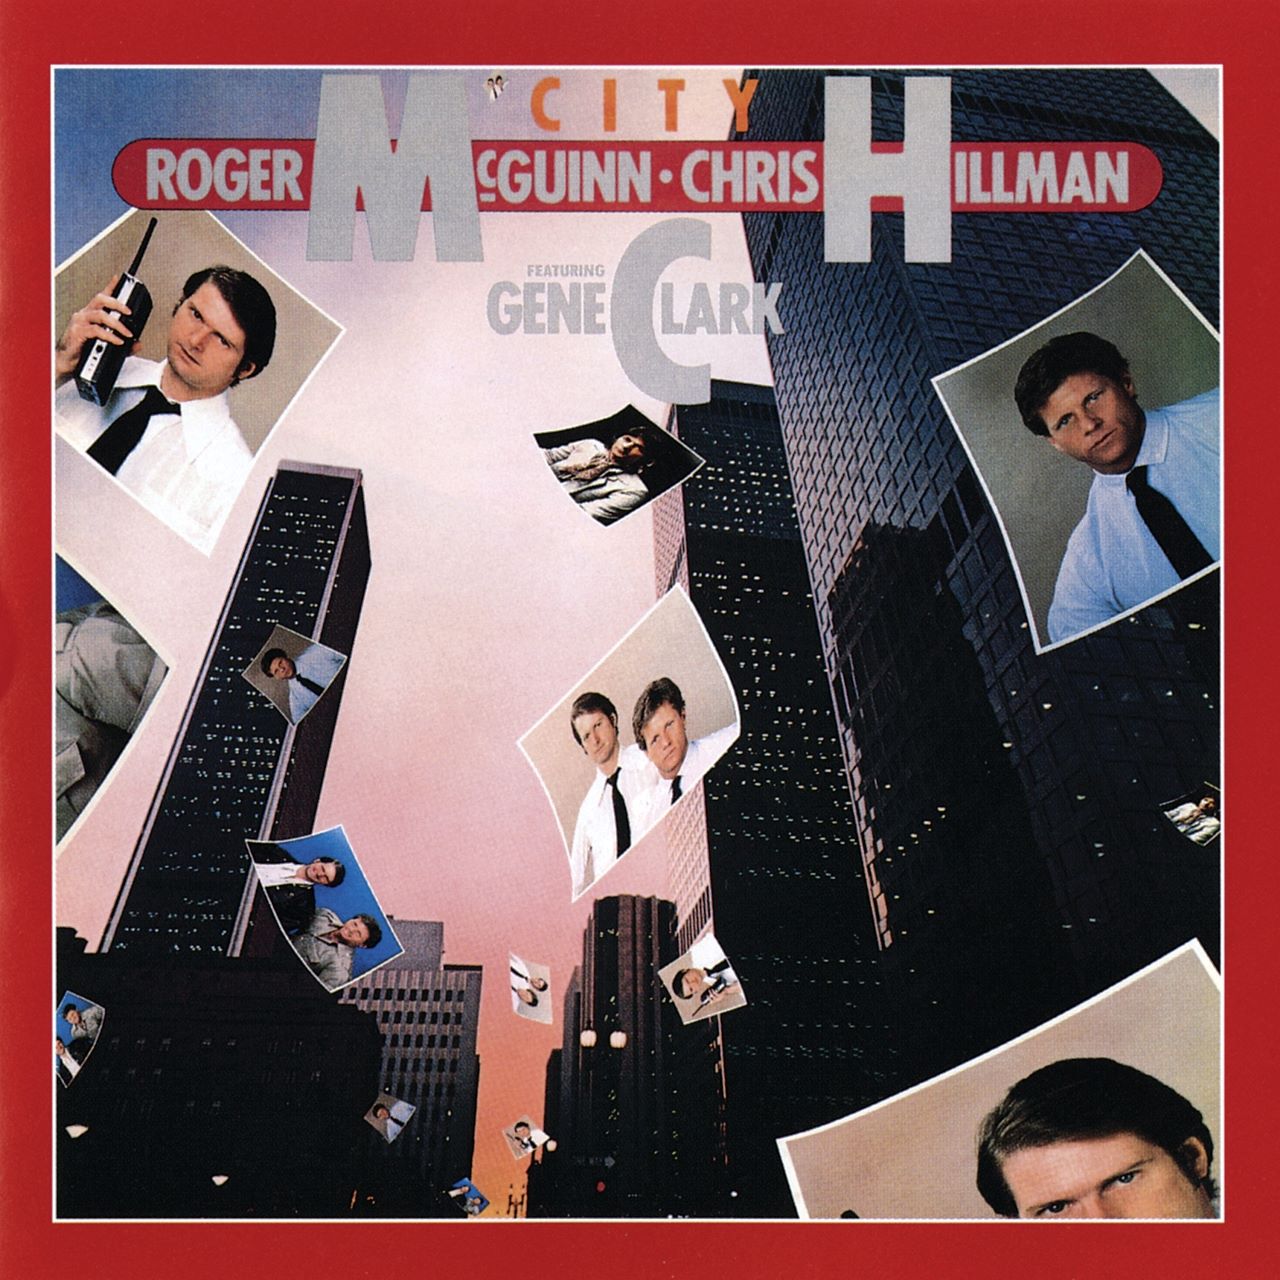 Roger McGuinn & Chris Hillman featuring Gene Clark - City cover album